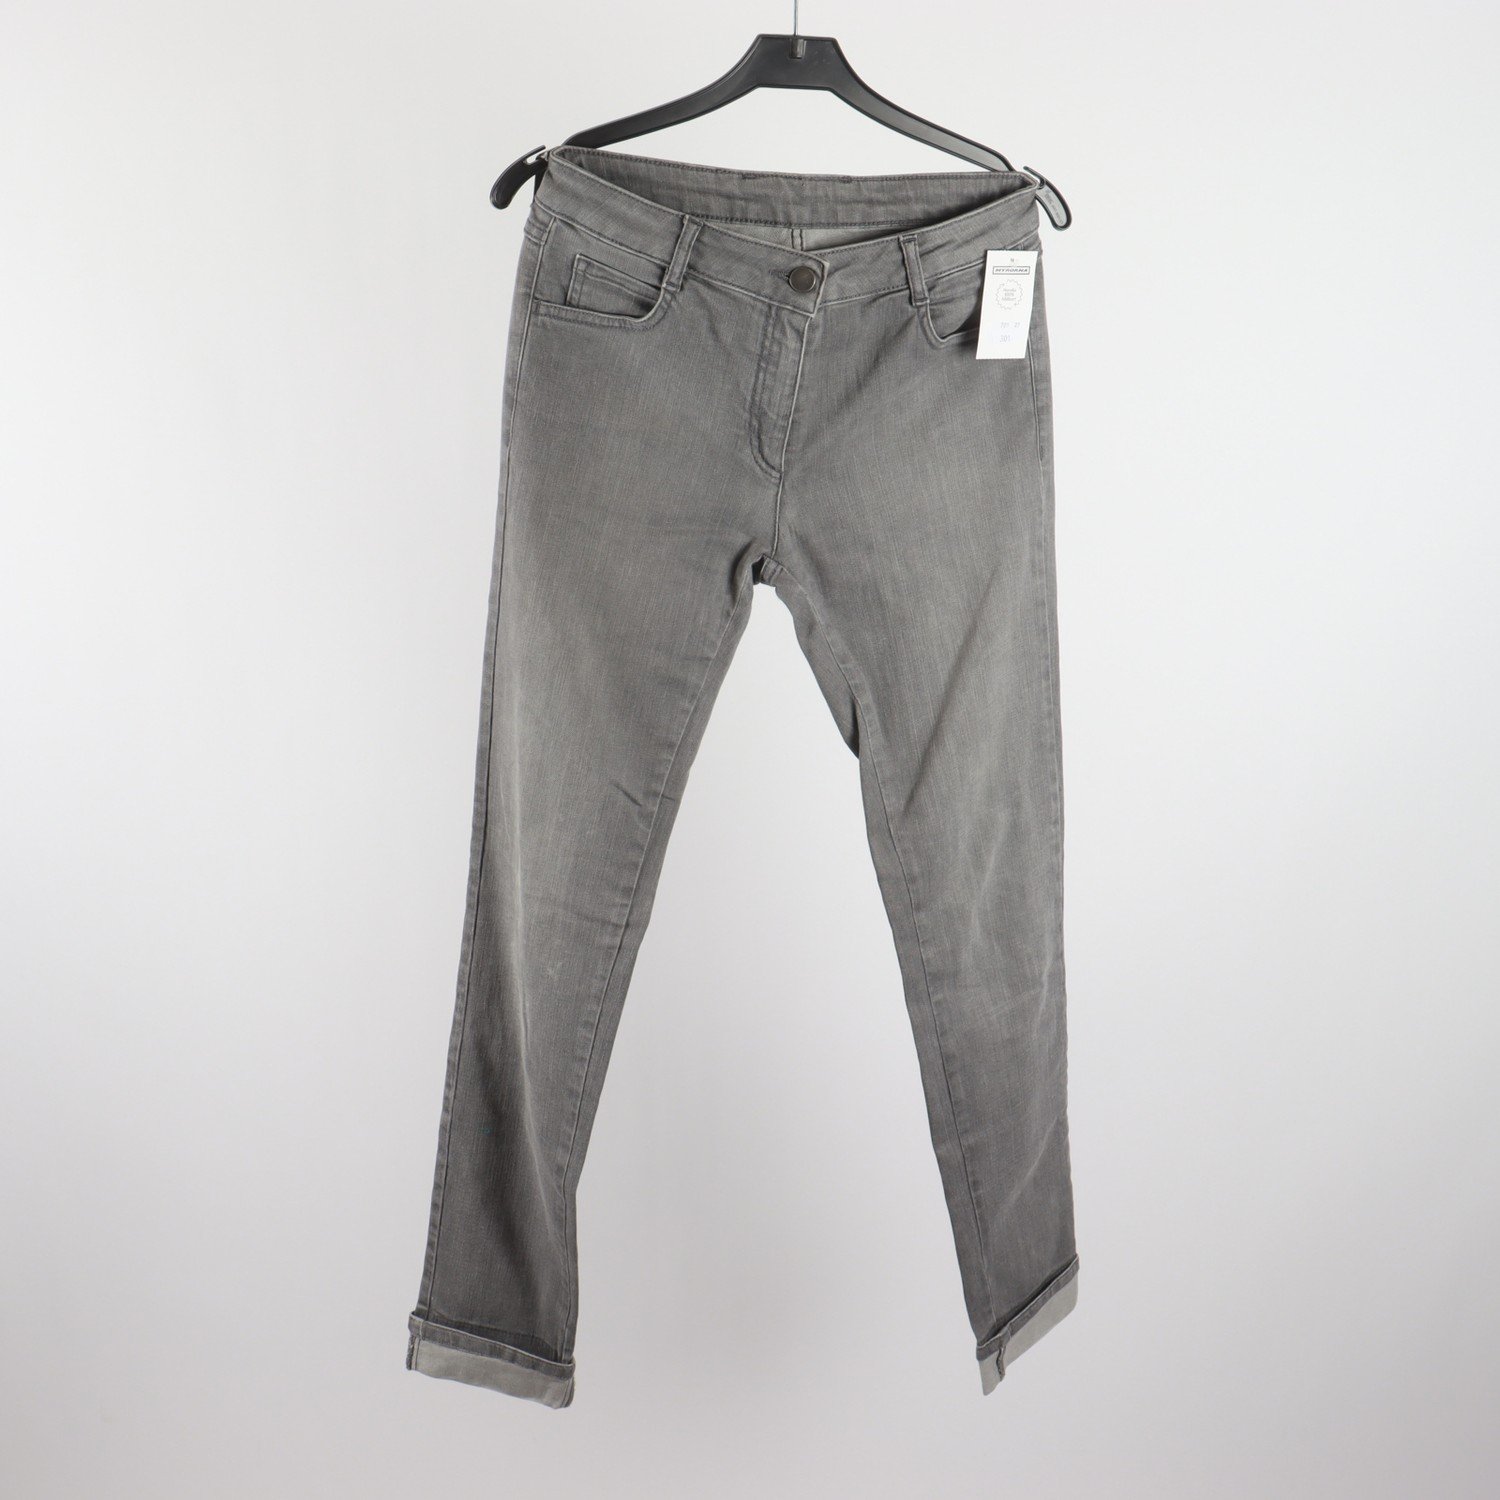 Jeans,Maison Martin Margiela, grå, stl. 40